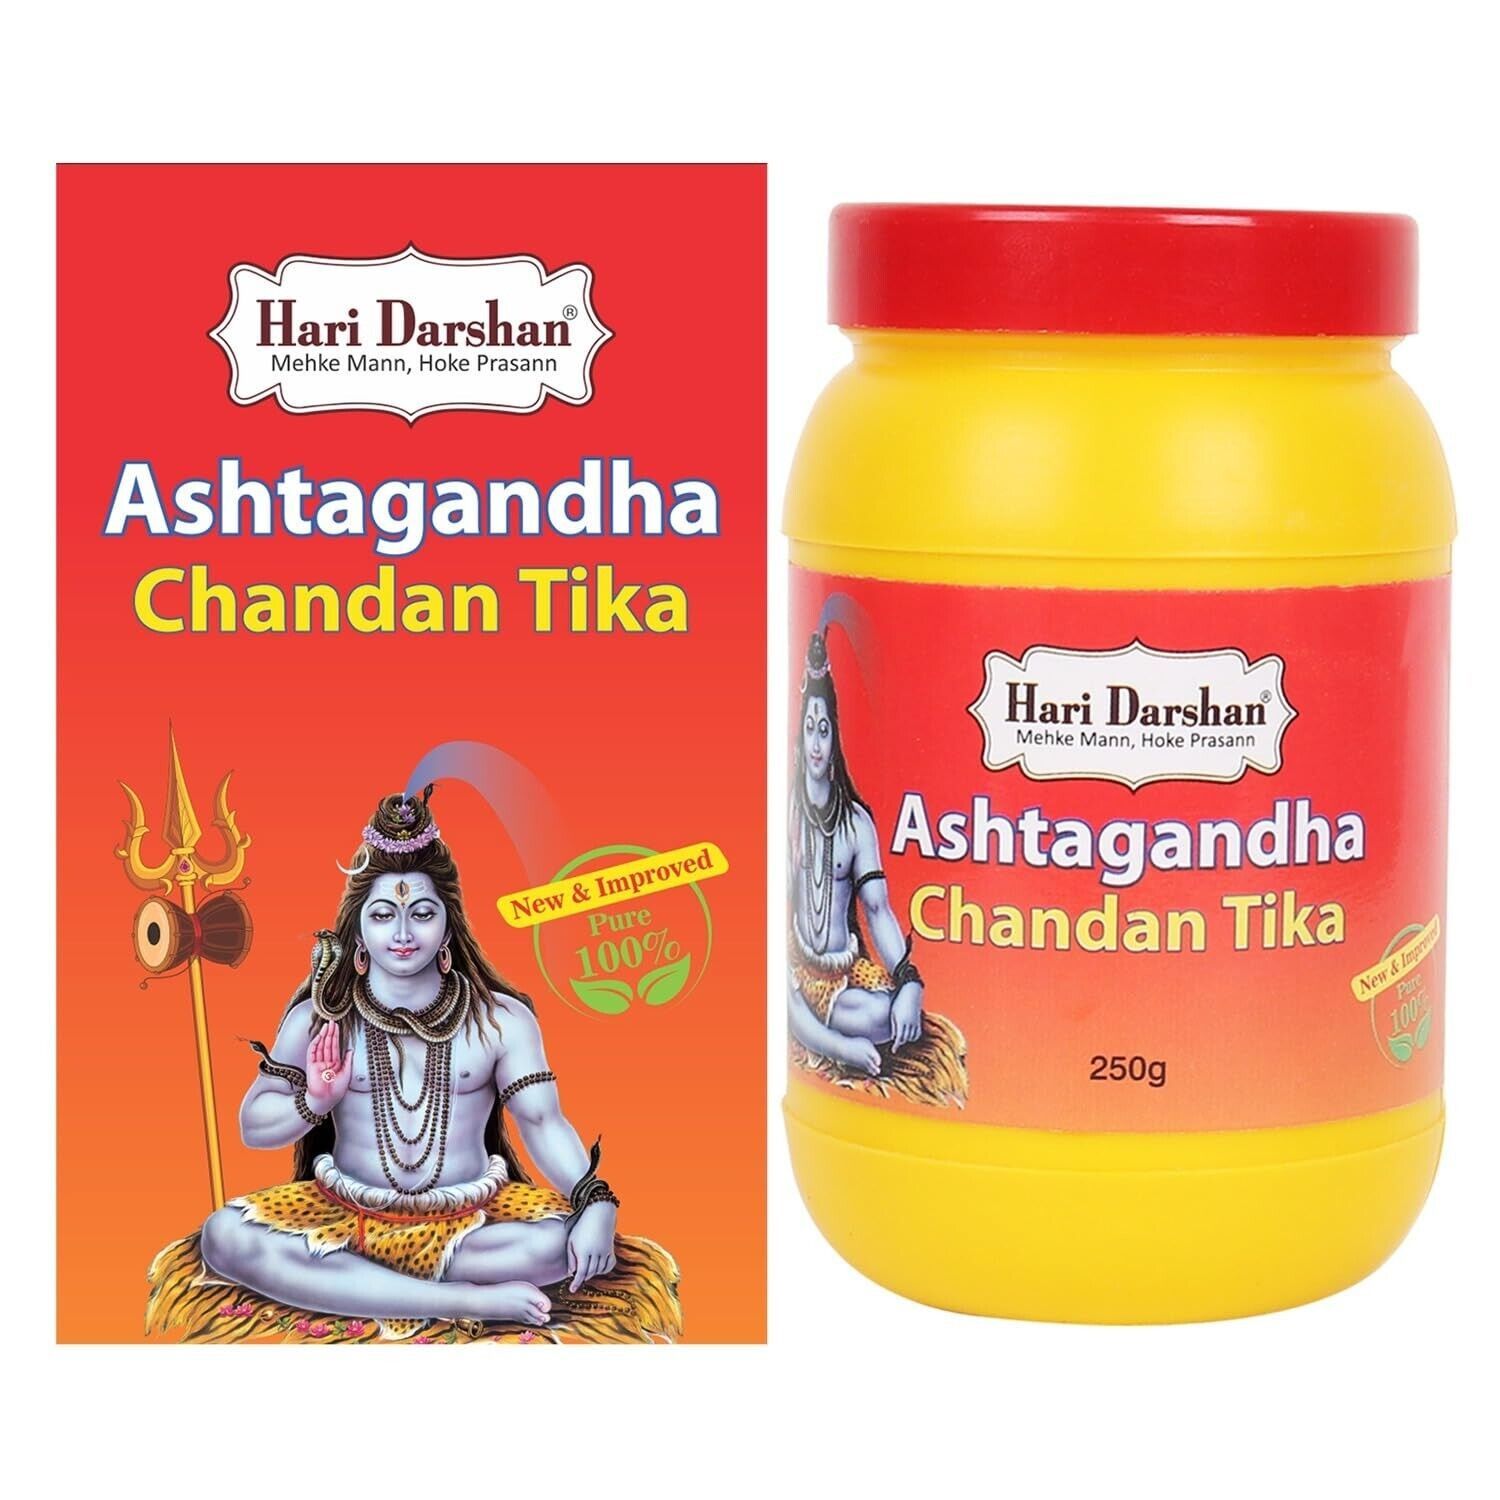 Primary image for Hari Darshan Ashtagandha Chandan Tika - 250 gm with Sandalwood Powder for Puja